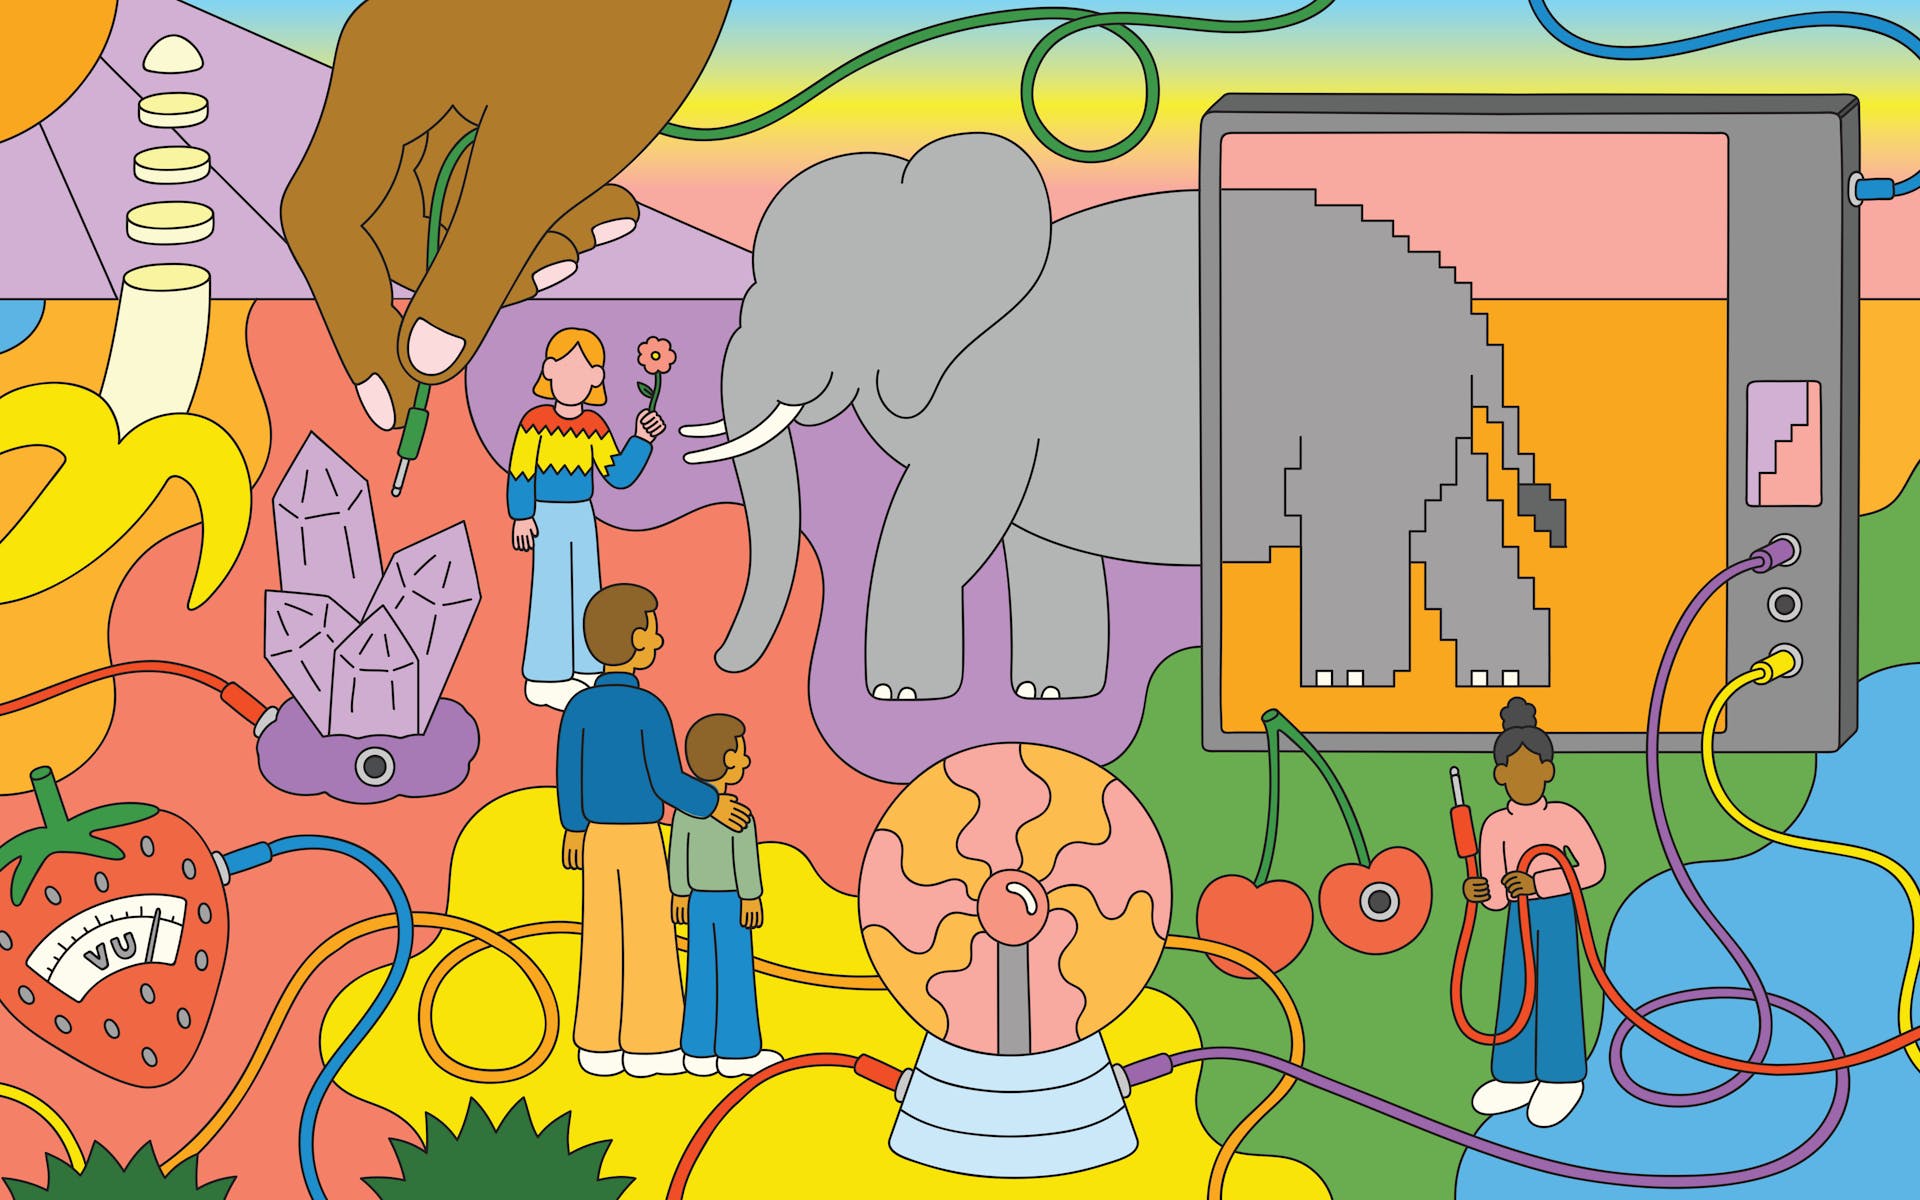 Colorful illustration depicting fantastical setting including elephant, cherries, figure holding flower, hand holding electrical plug, etc.